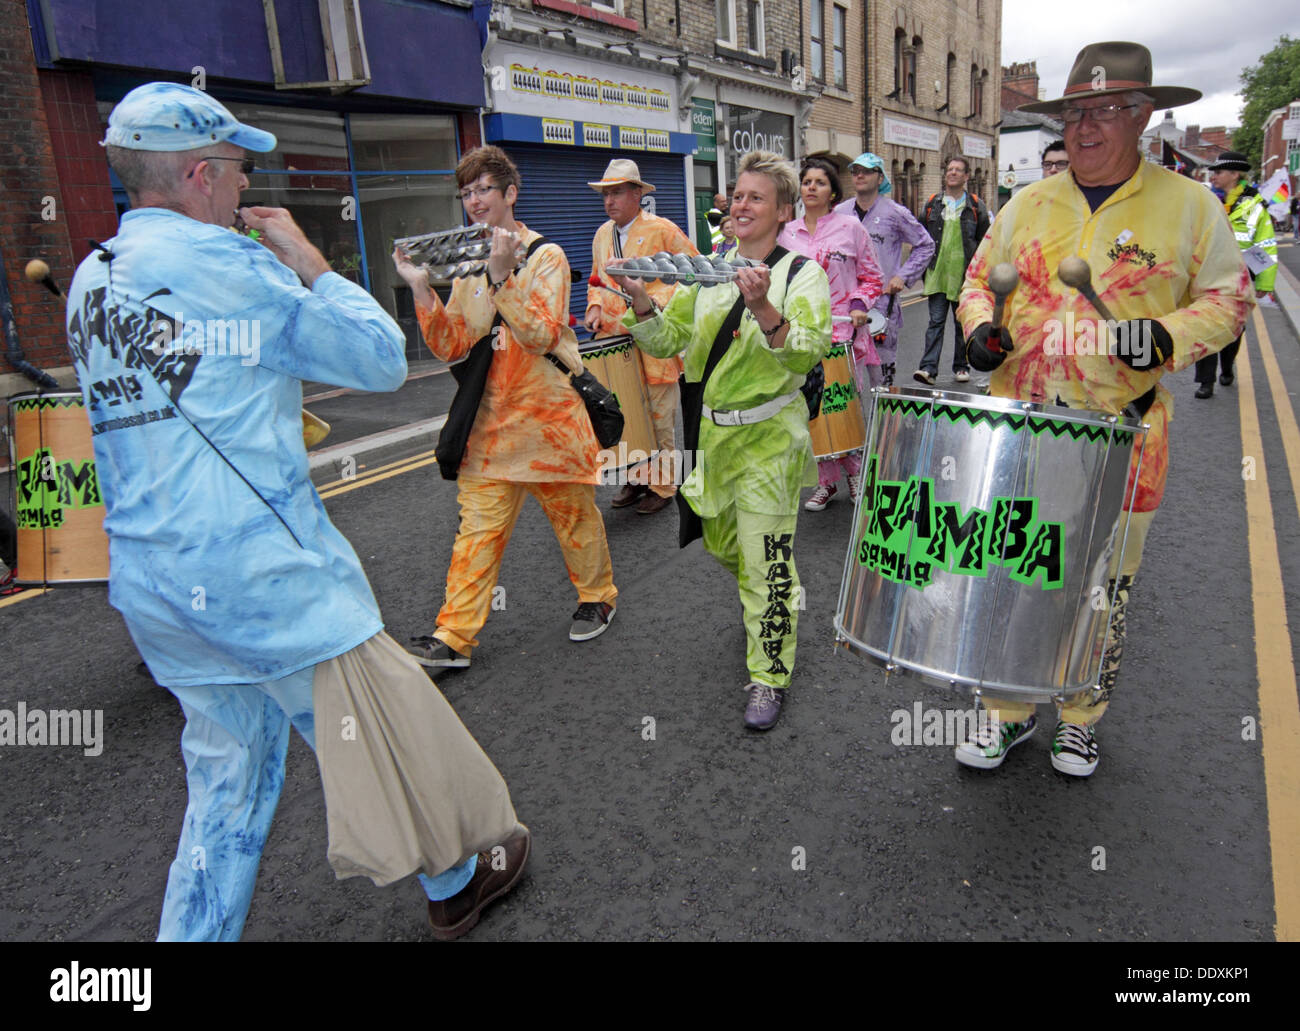 Karamba samba leading Warrington Pride September 2013 Cheshire England UK WA1 Stock Photo